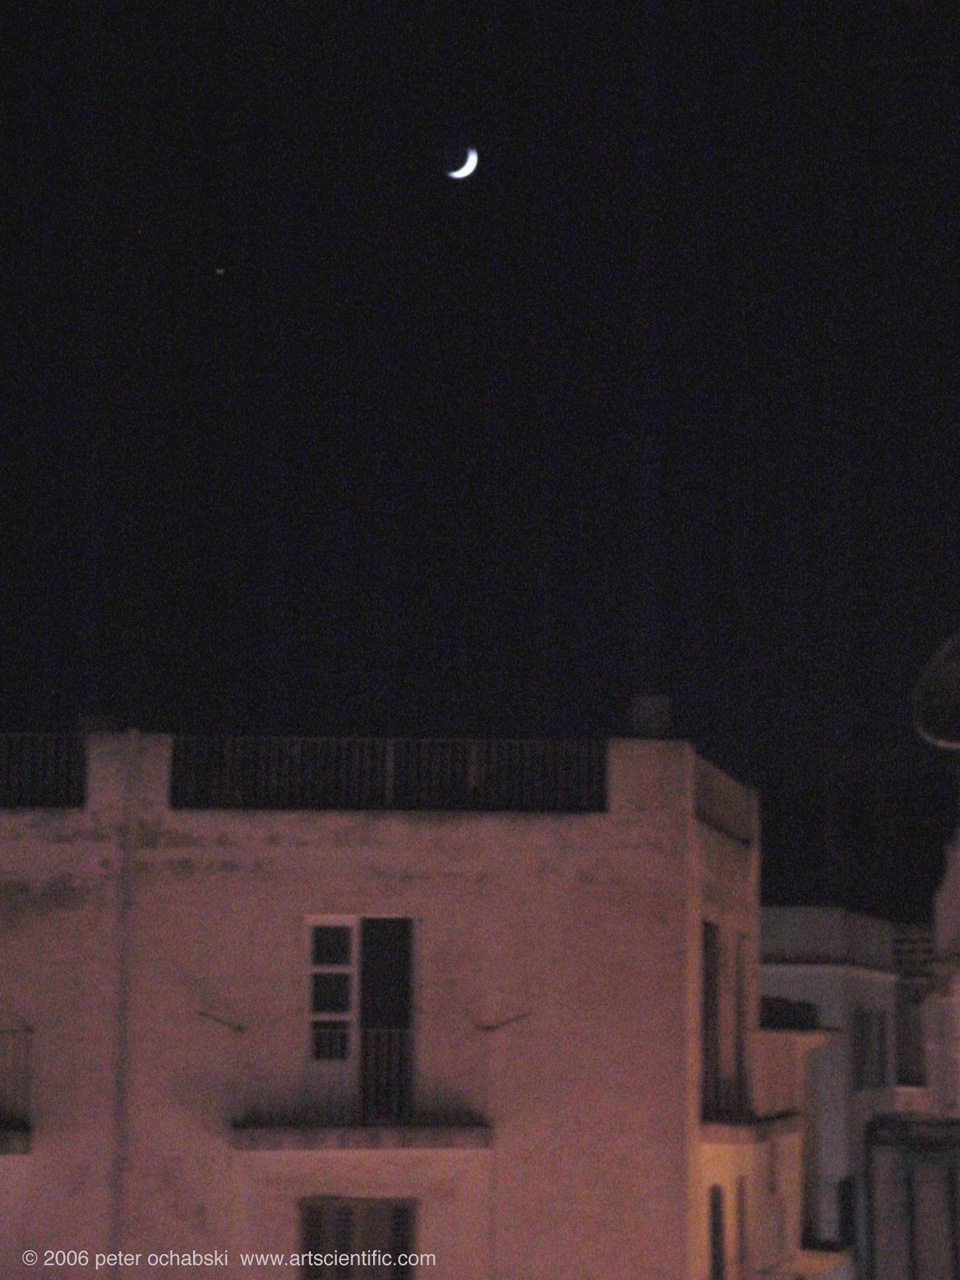 ibizan hotel and crescent moon